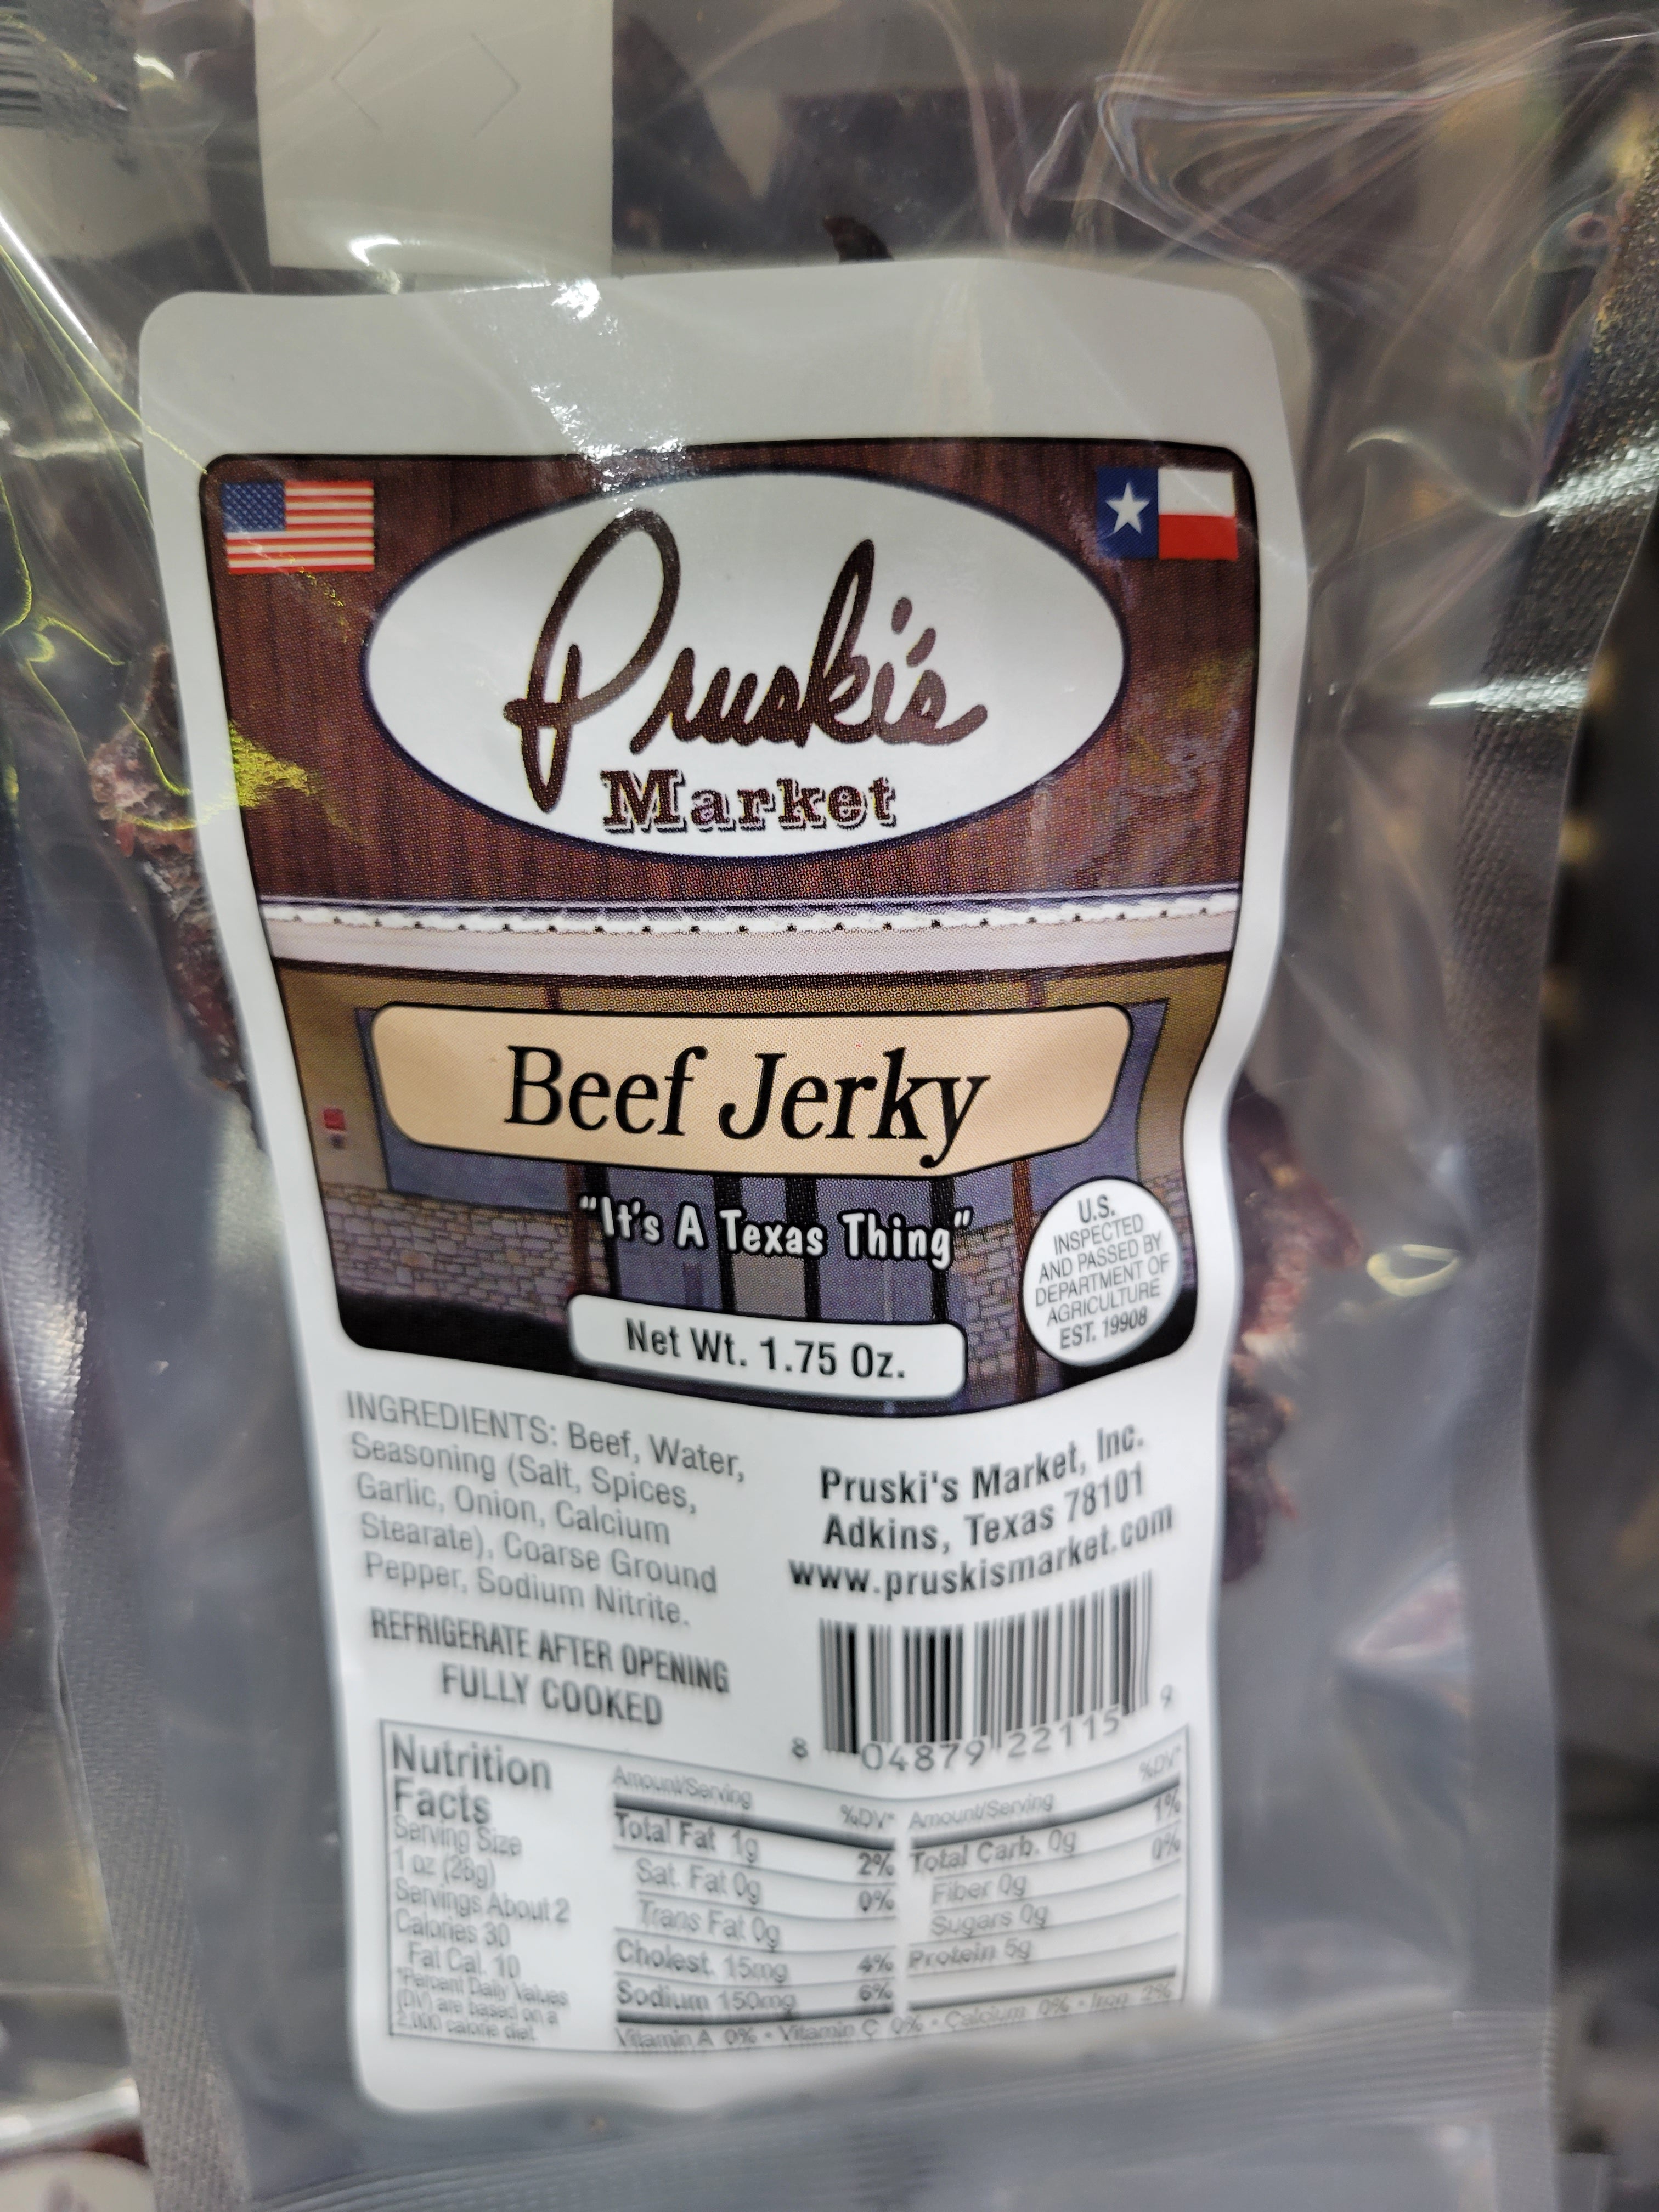 Original Beef Jerky - Hardtimes Beef Jerky